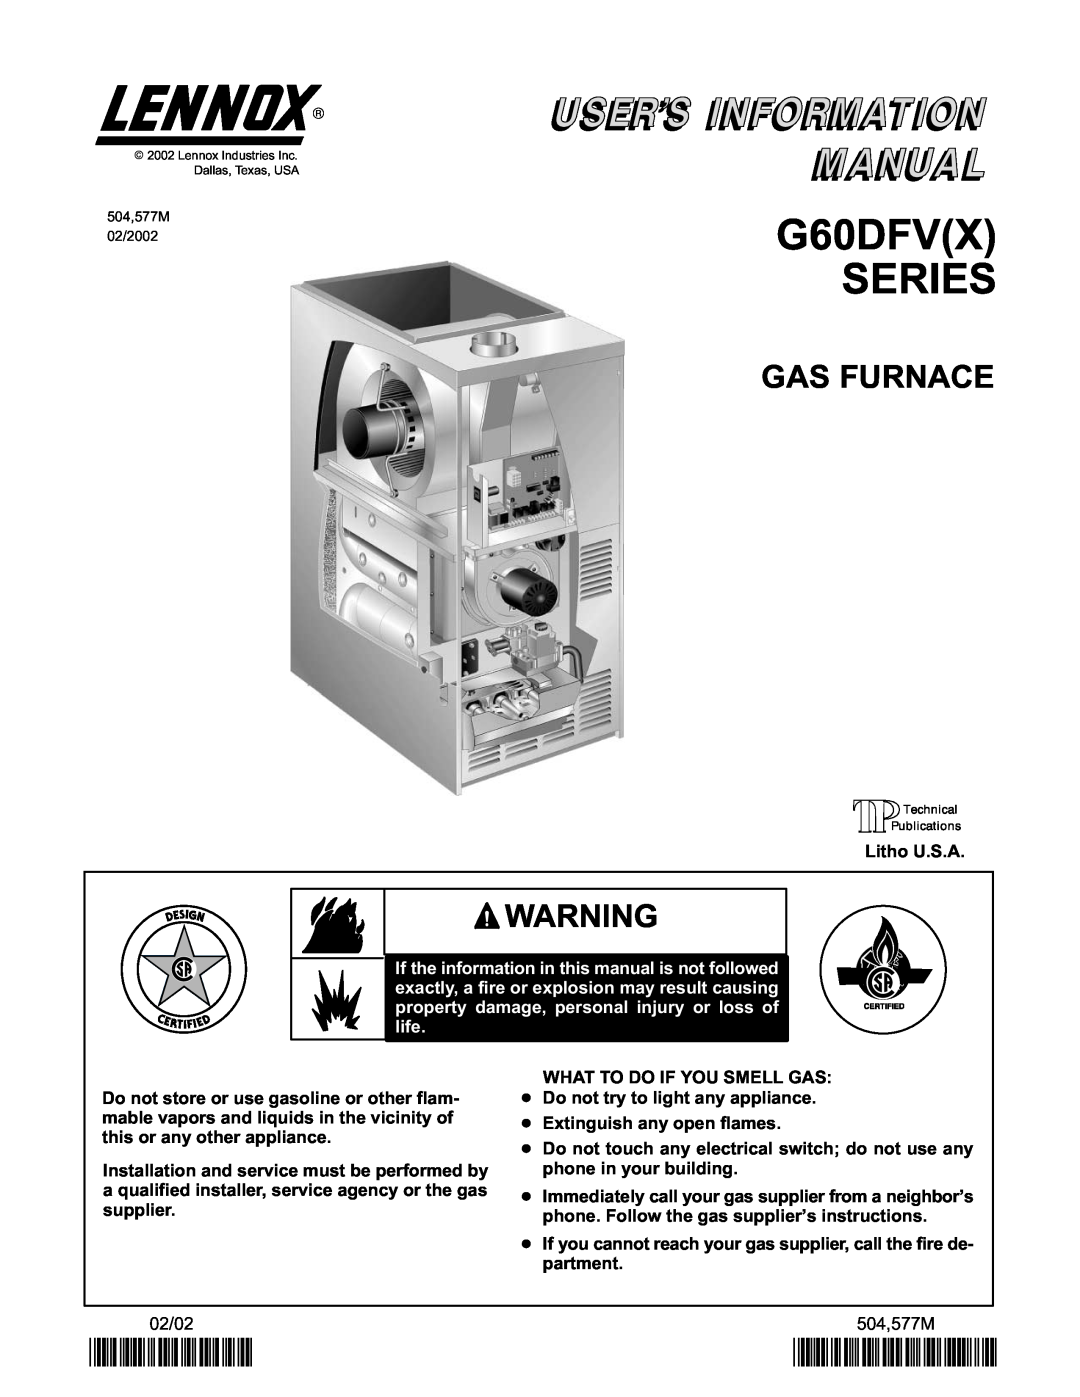 Lenoxx Electronics G60DFV(X) manual G60DFVX SERIES, Gas Furnace, 2P0202, P504577M 